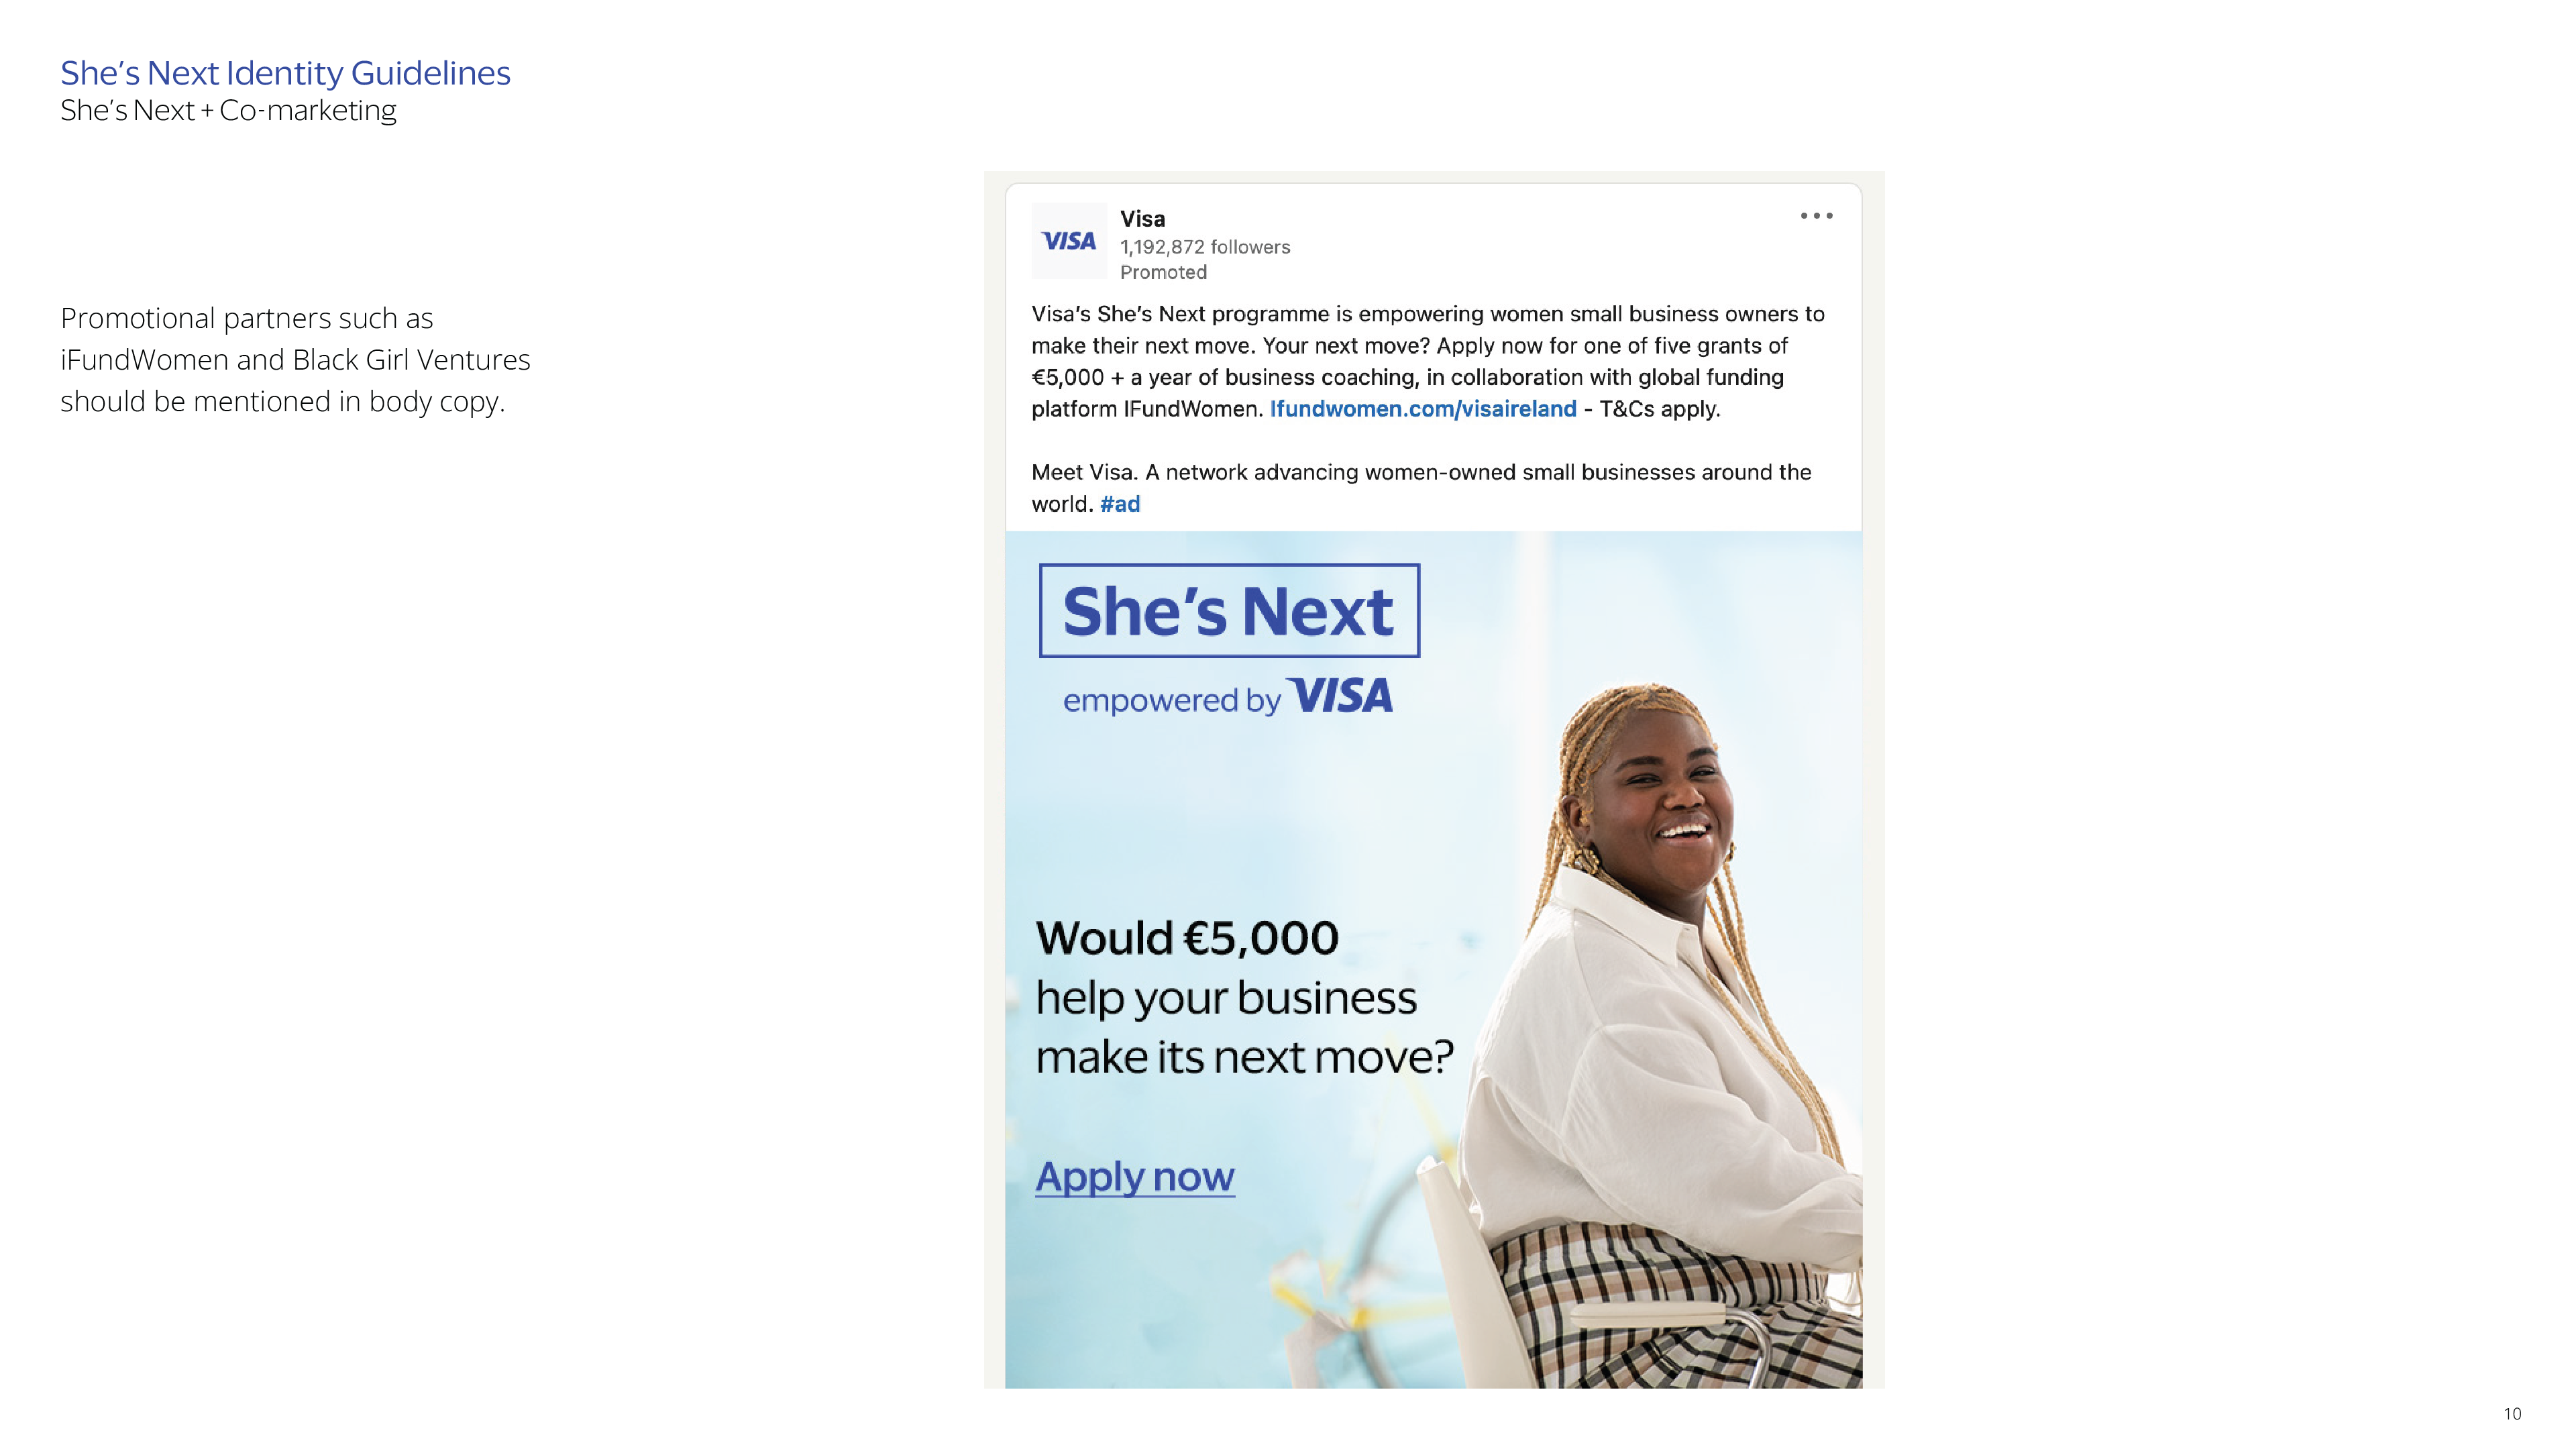 njg-visa-shes-next-identity-guide-12